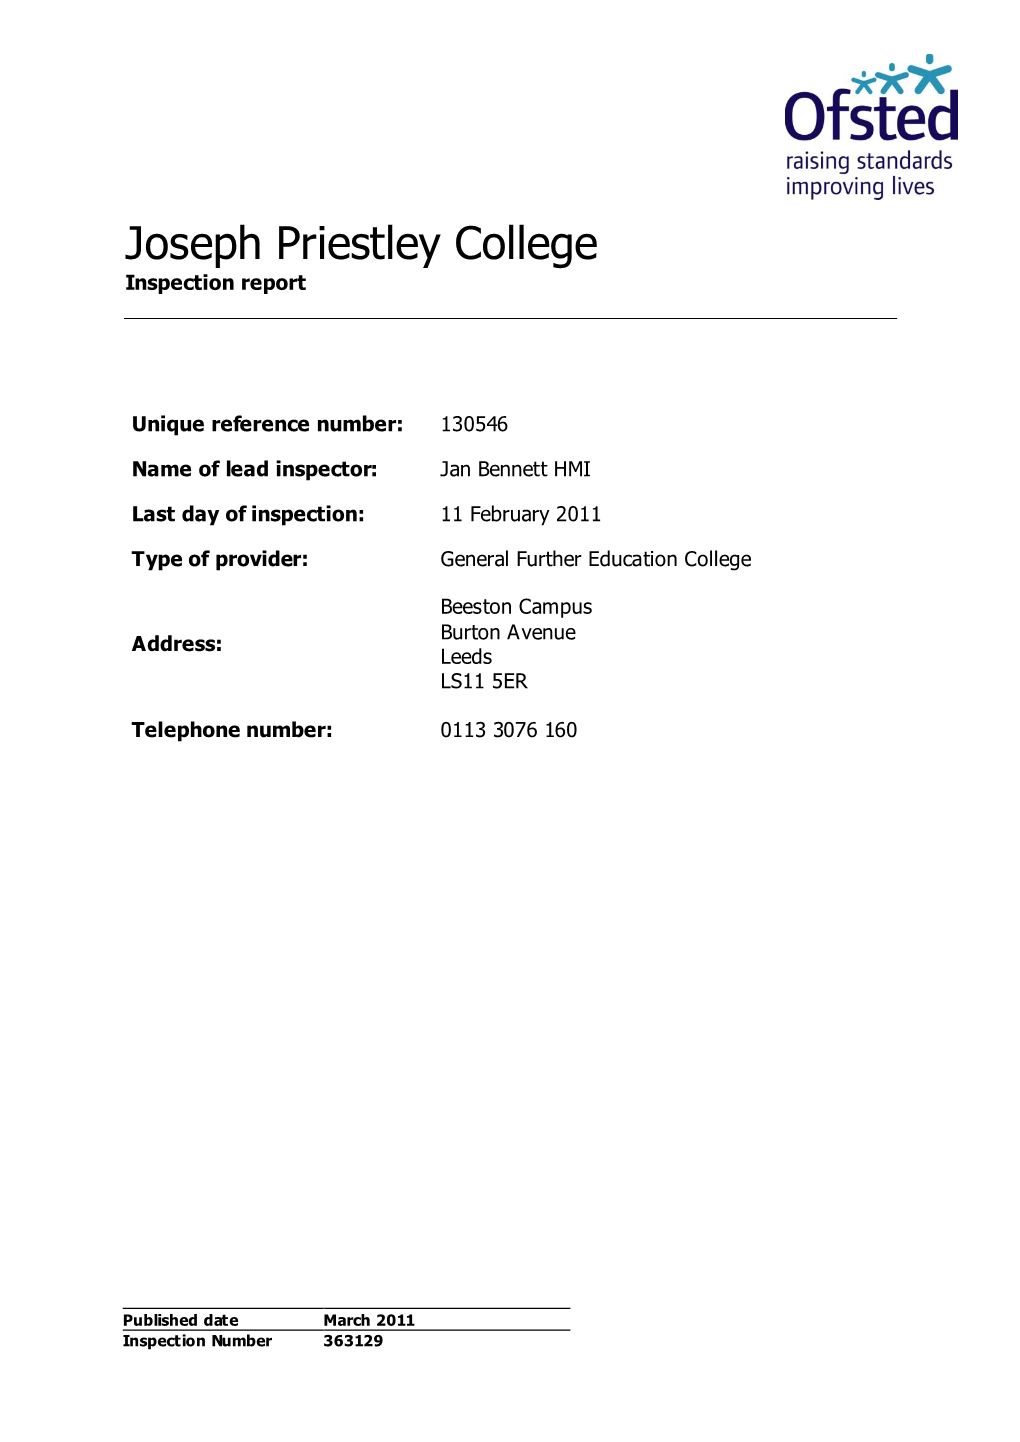 Joseph Priestley College Inspection Report